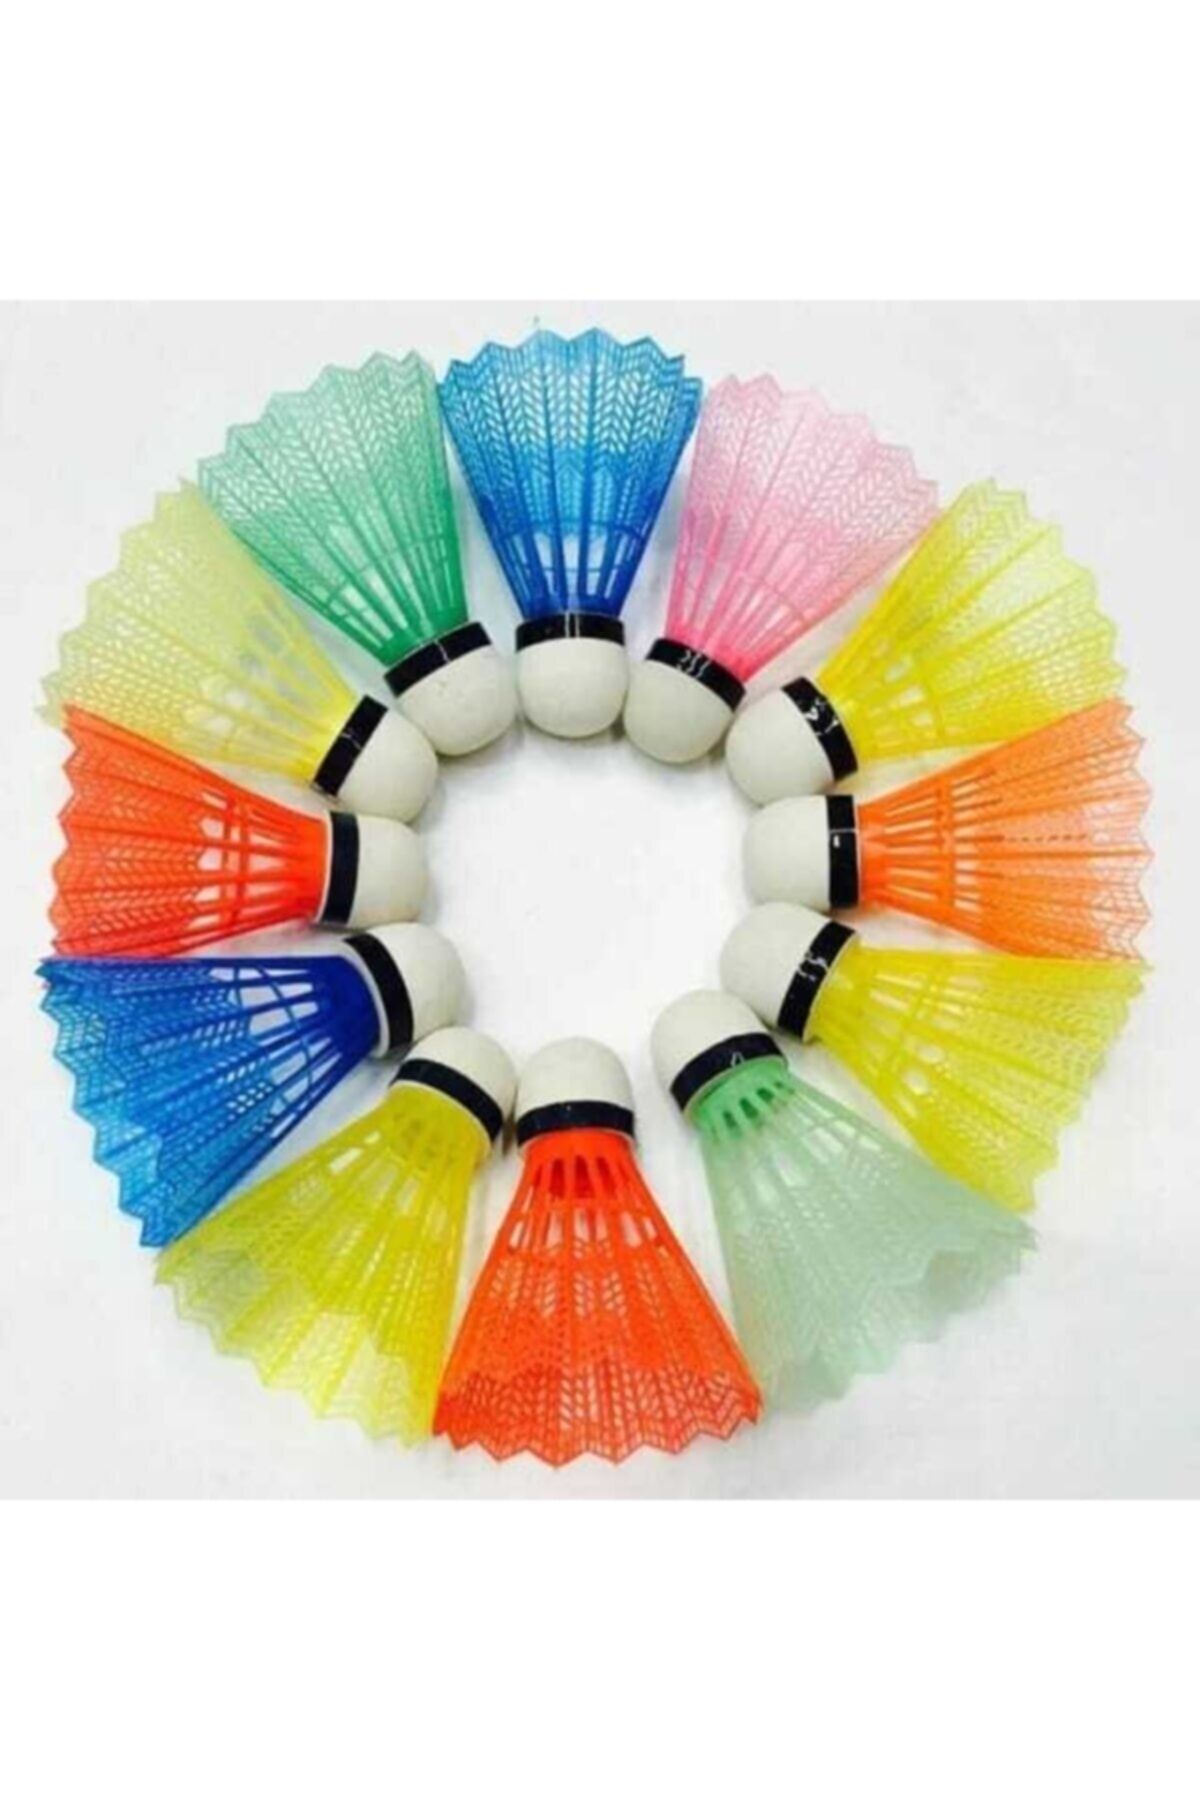 deniz sport 12 Adet Plastik Badminton Topu Renkli